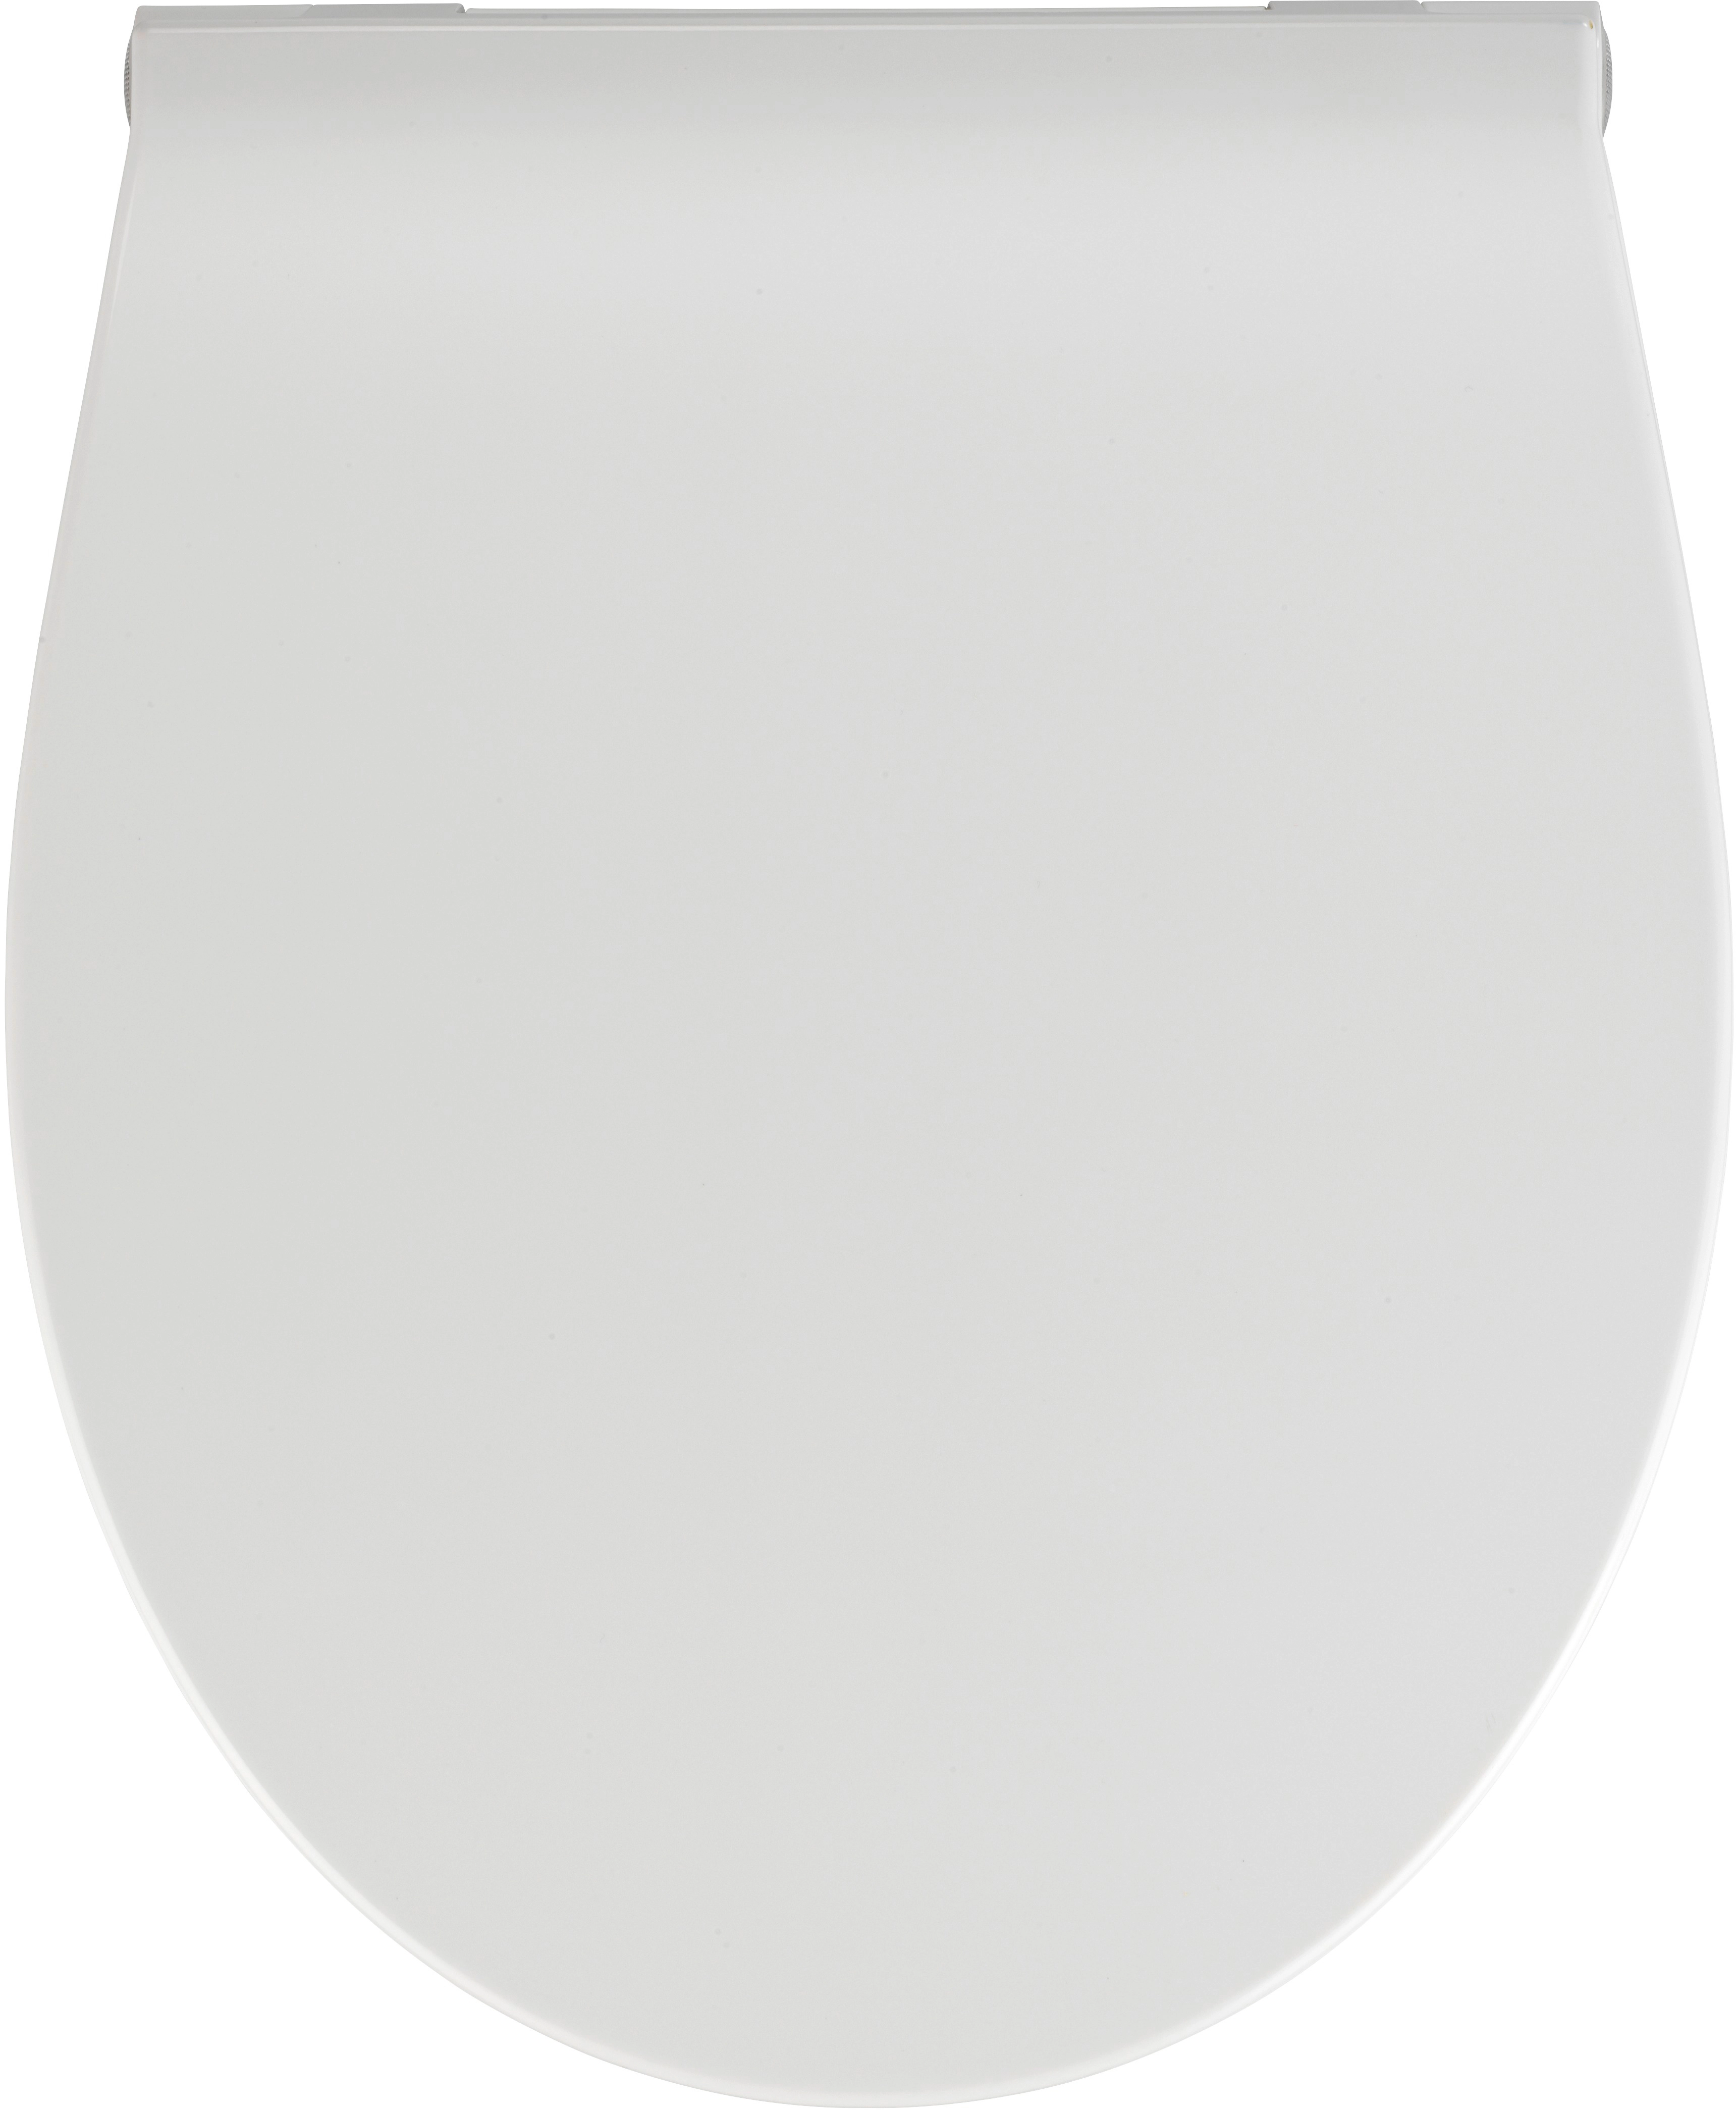 Weiß LED Premium WC-Sitz Akustiksensor OBI Wenko kaufen bei